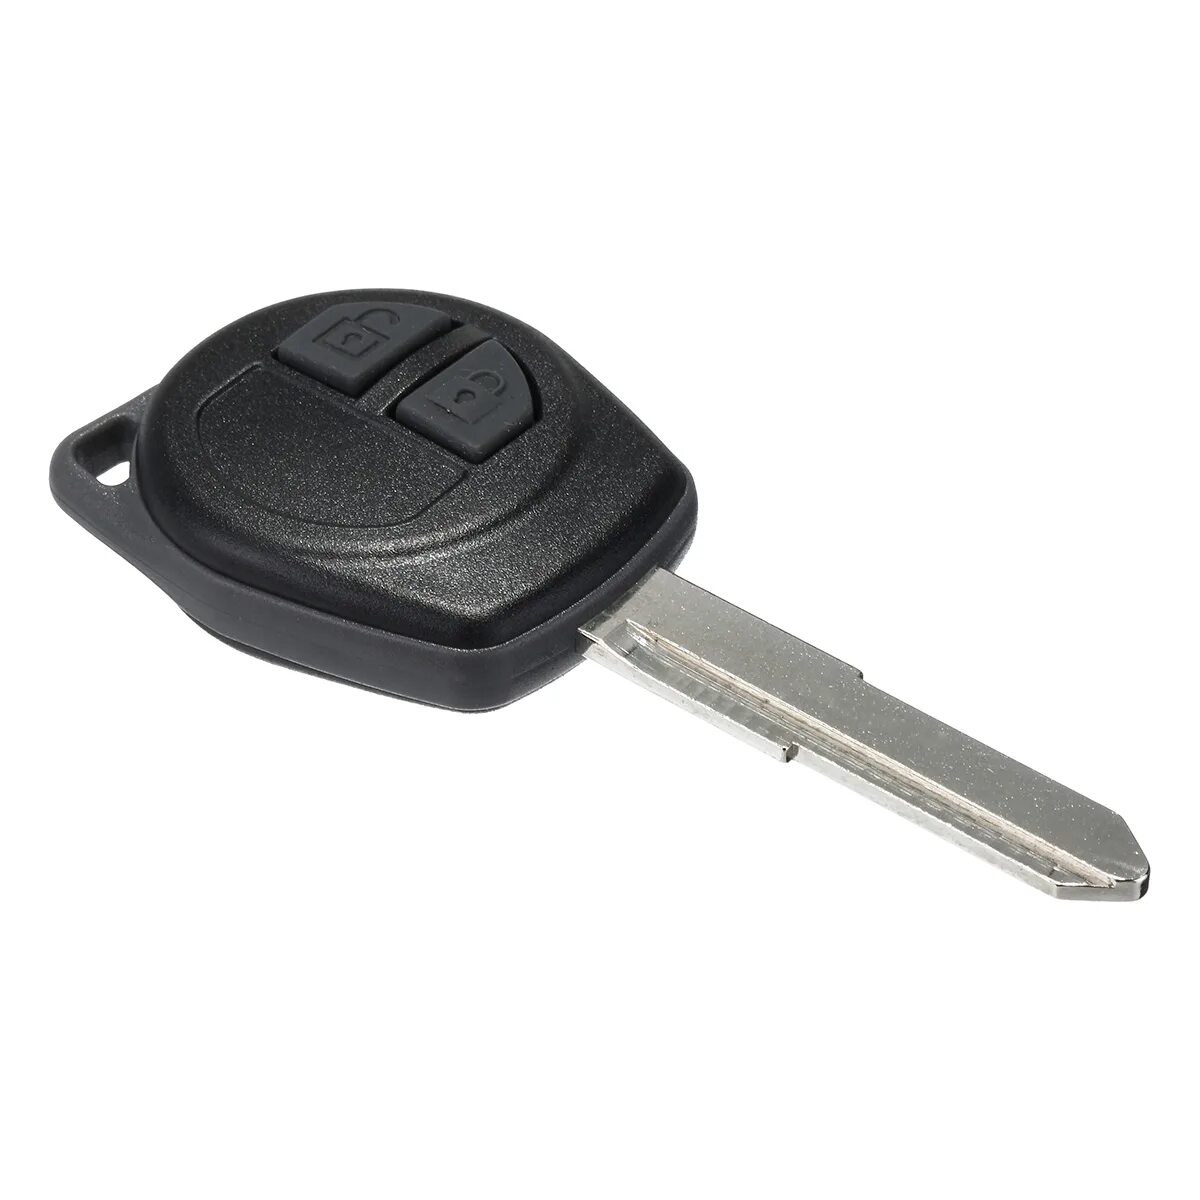 Машина пульт ключ. 2003 Suzuki Ignis Key FOB. Aprilia Scarabeo 400 пульт ключ. Suzuki Ignis 2007 ключ от машины. Nissan пульт ключа.